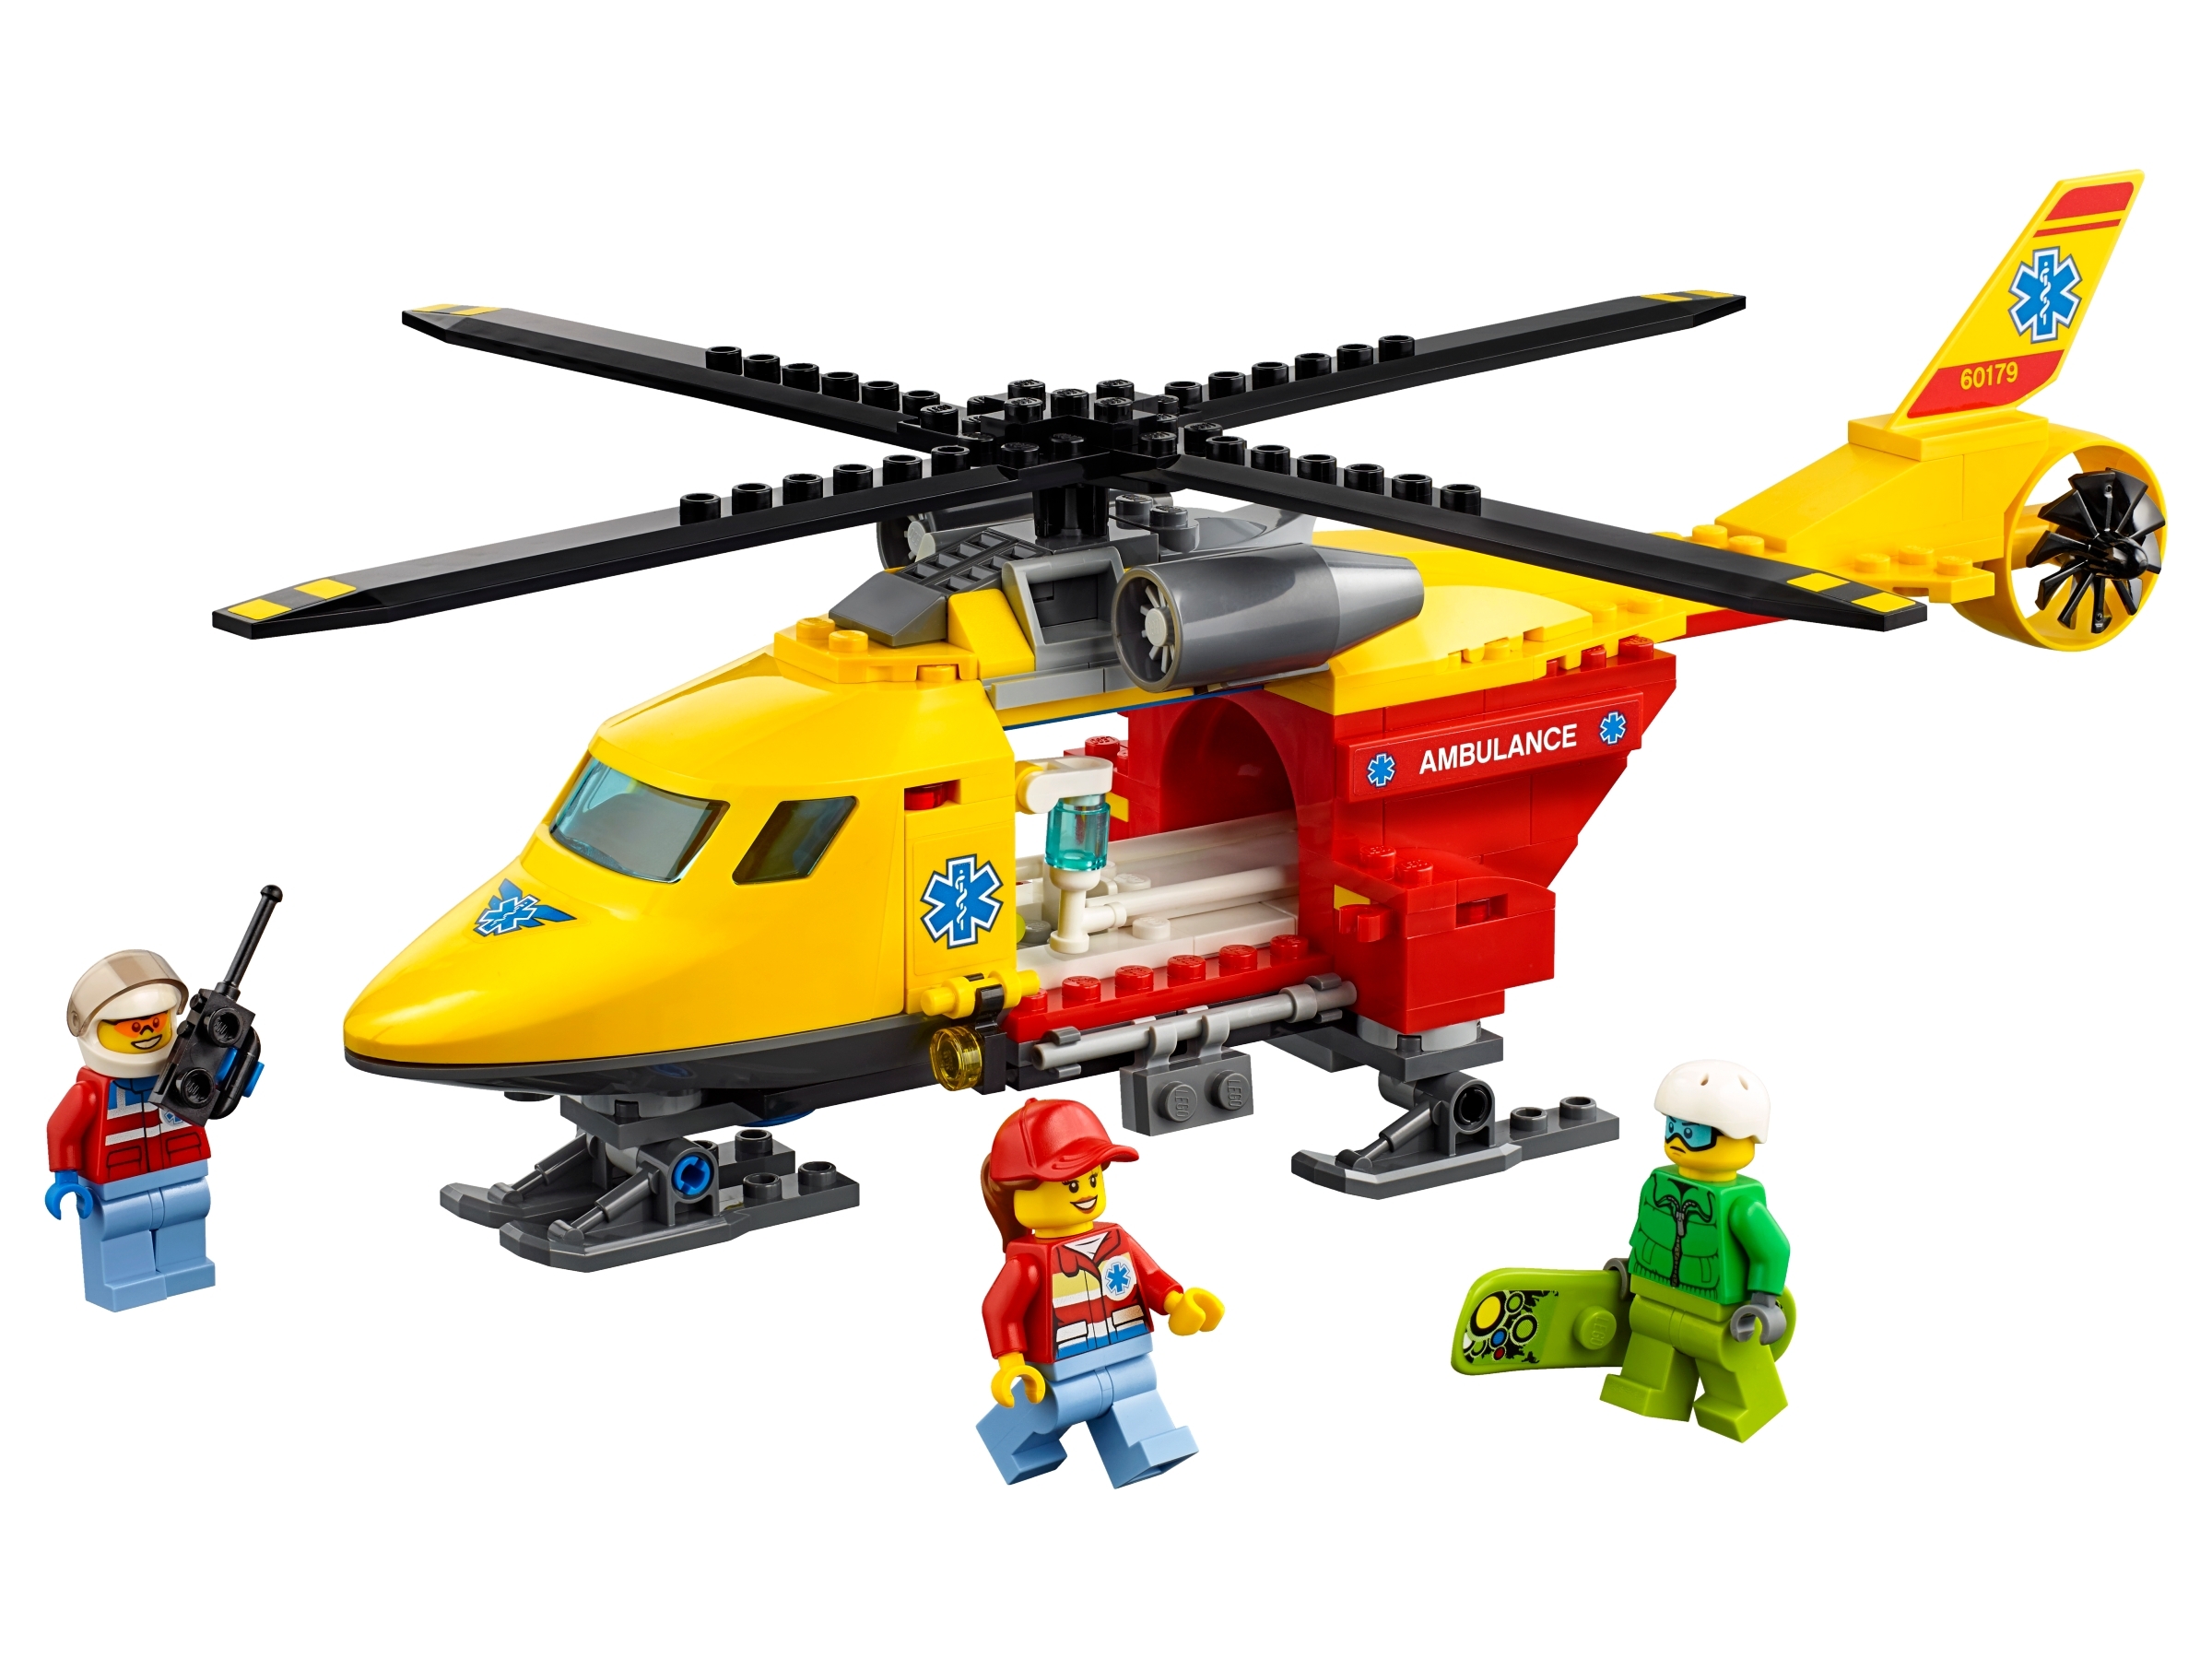 Ambulance Helicopter 60179 | City | Buy 